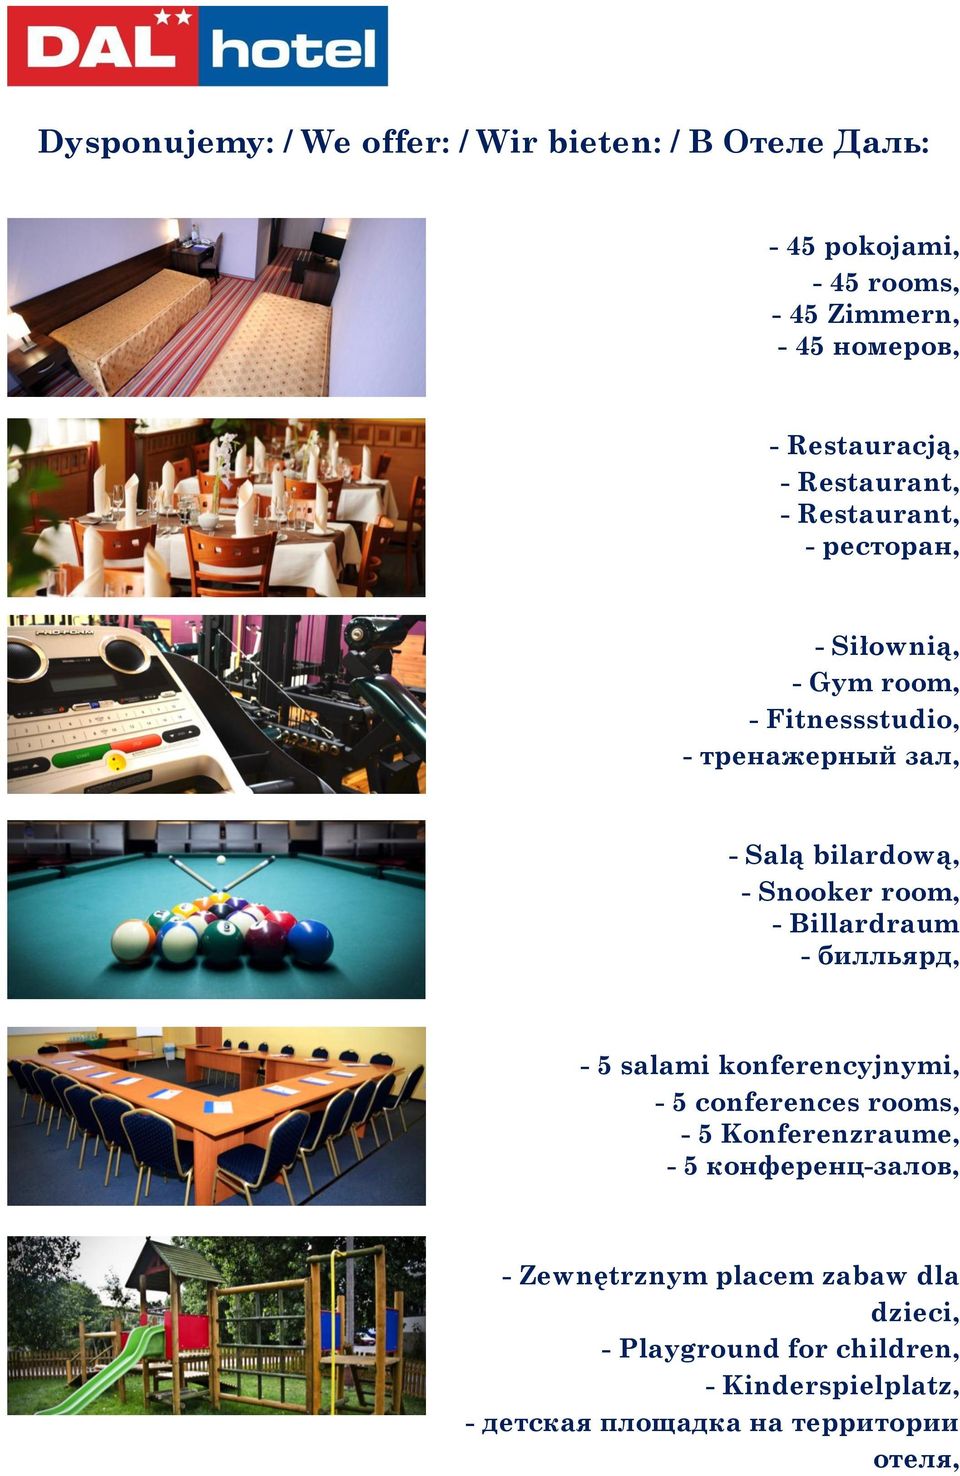 Snooker room, - Billardraum - билльярд, - 5 salami konferencyjnymi, - 5 conferences rooms, - 5 Konferenzraume, - 5